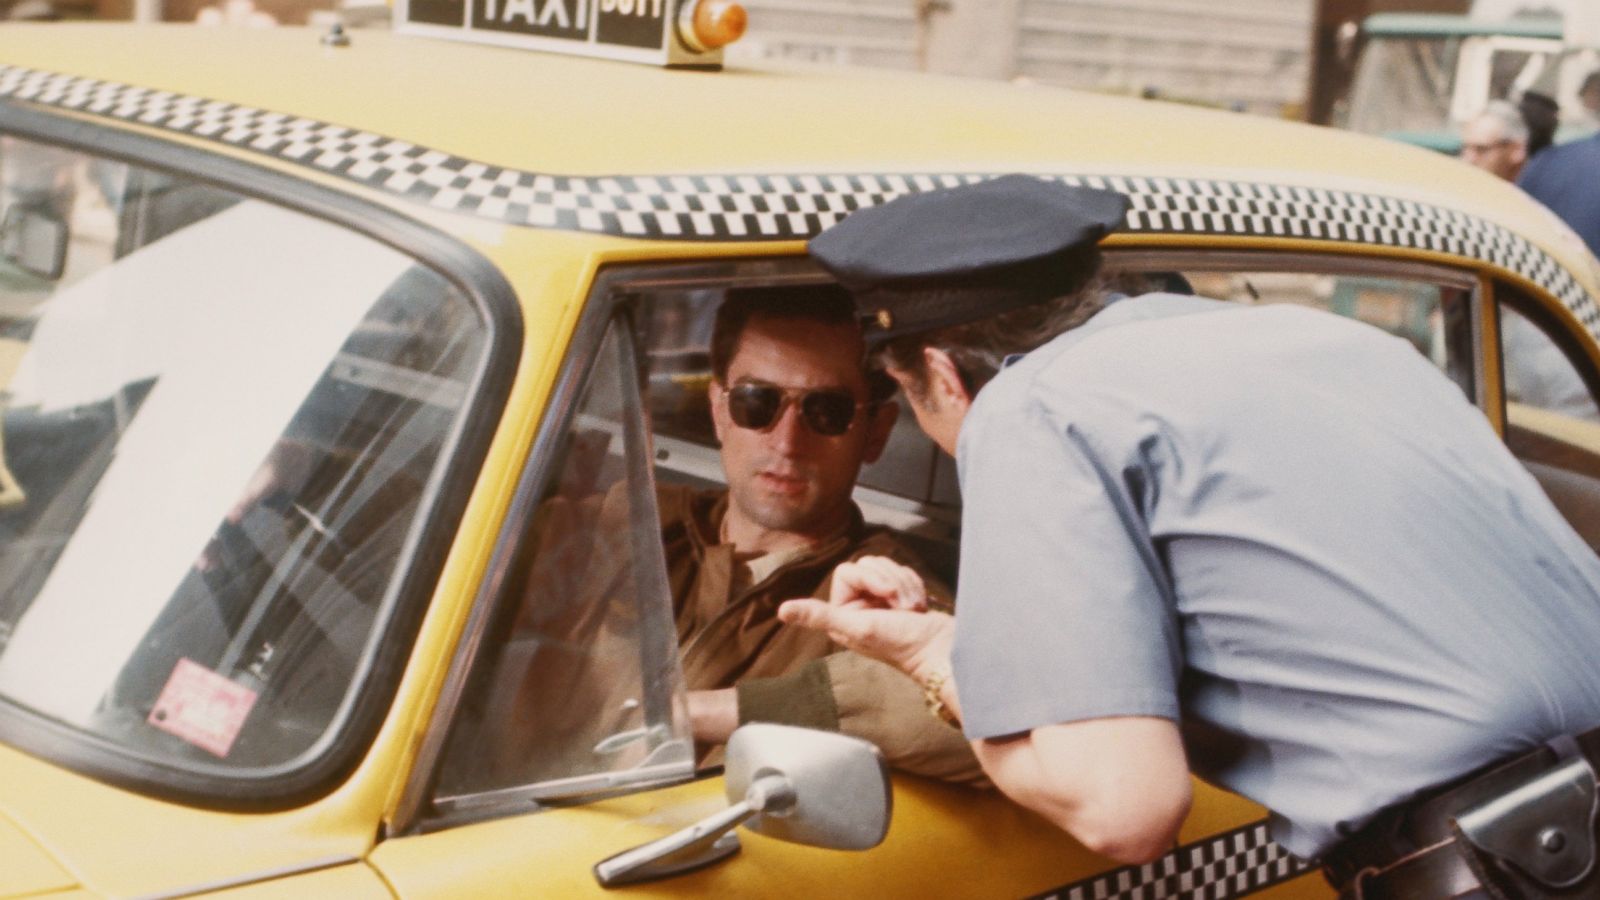 Taxi Driver Dvd - 1600x900 Wallpaper 